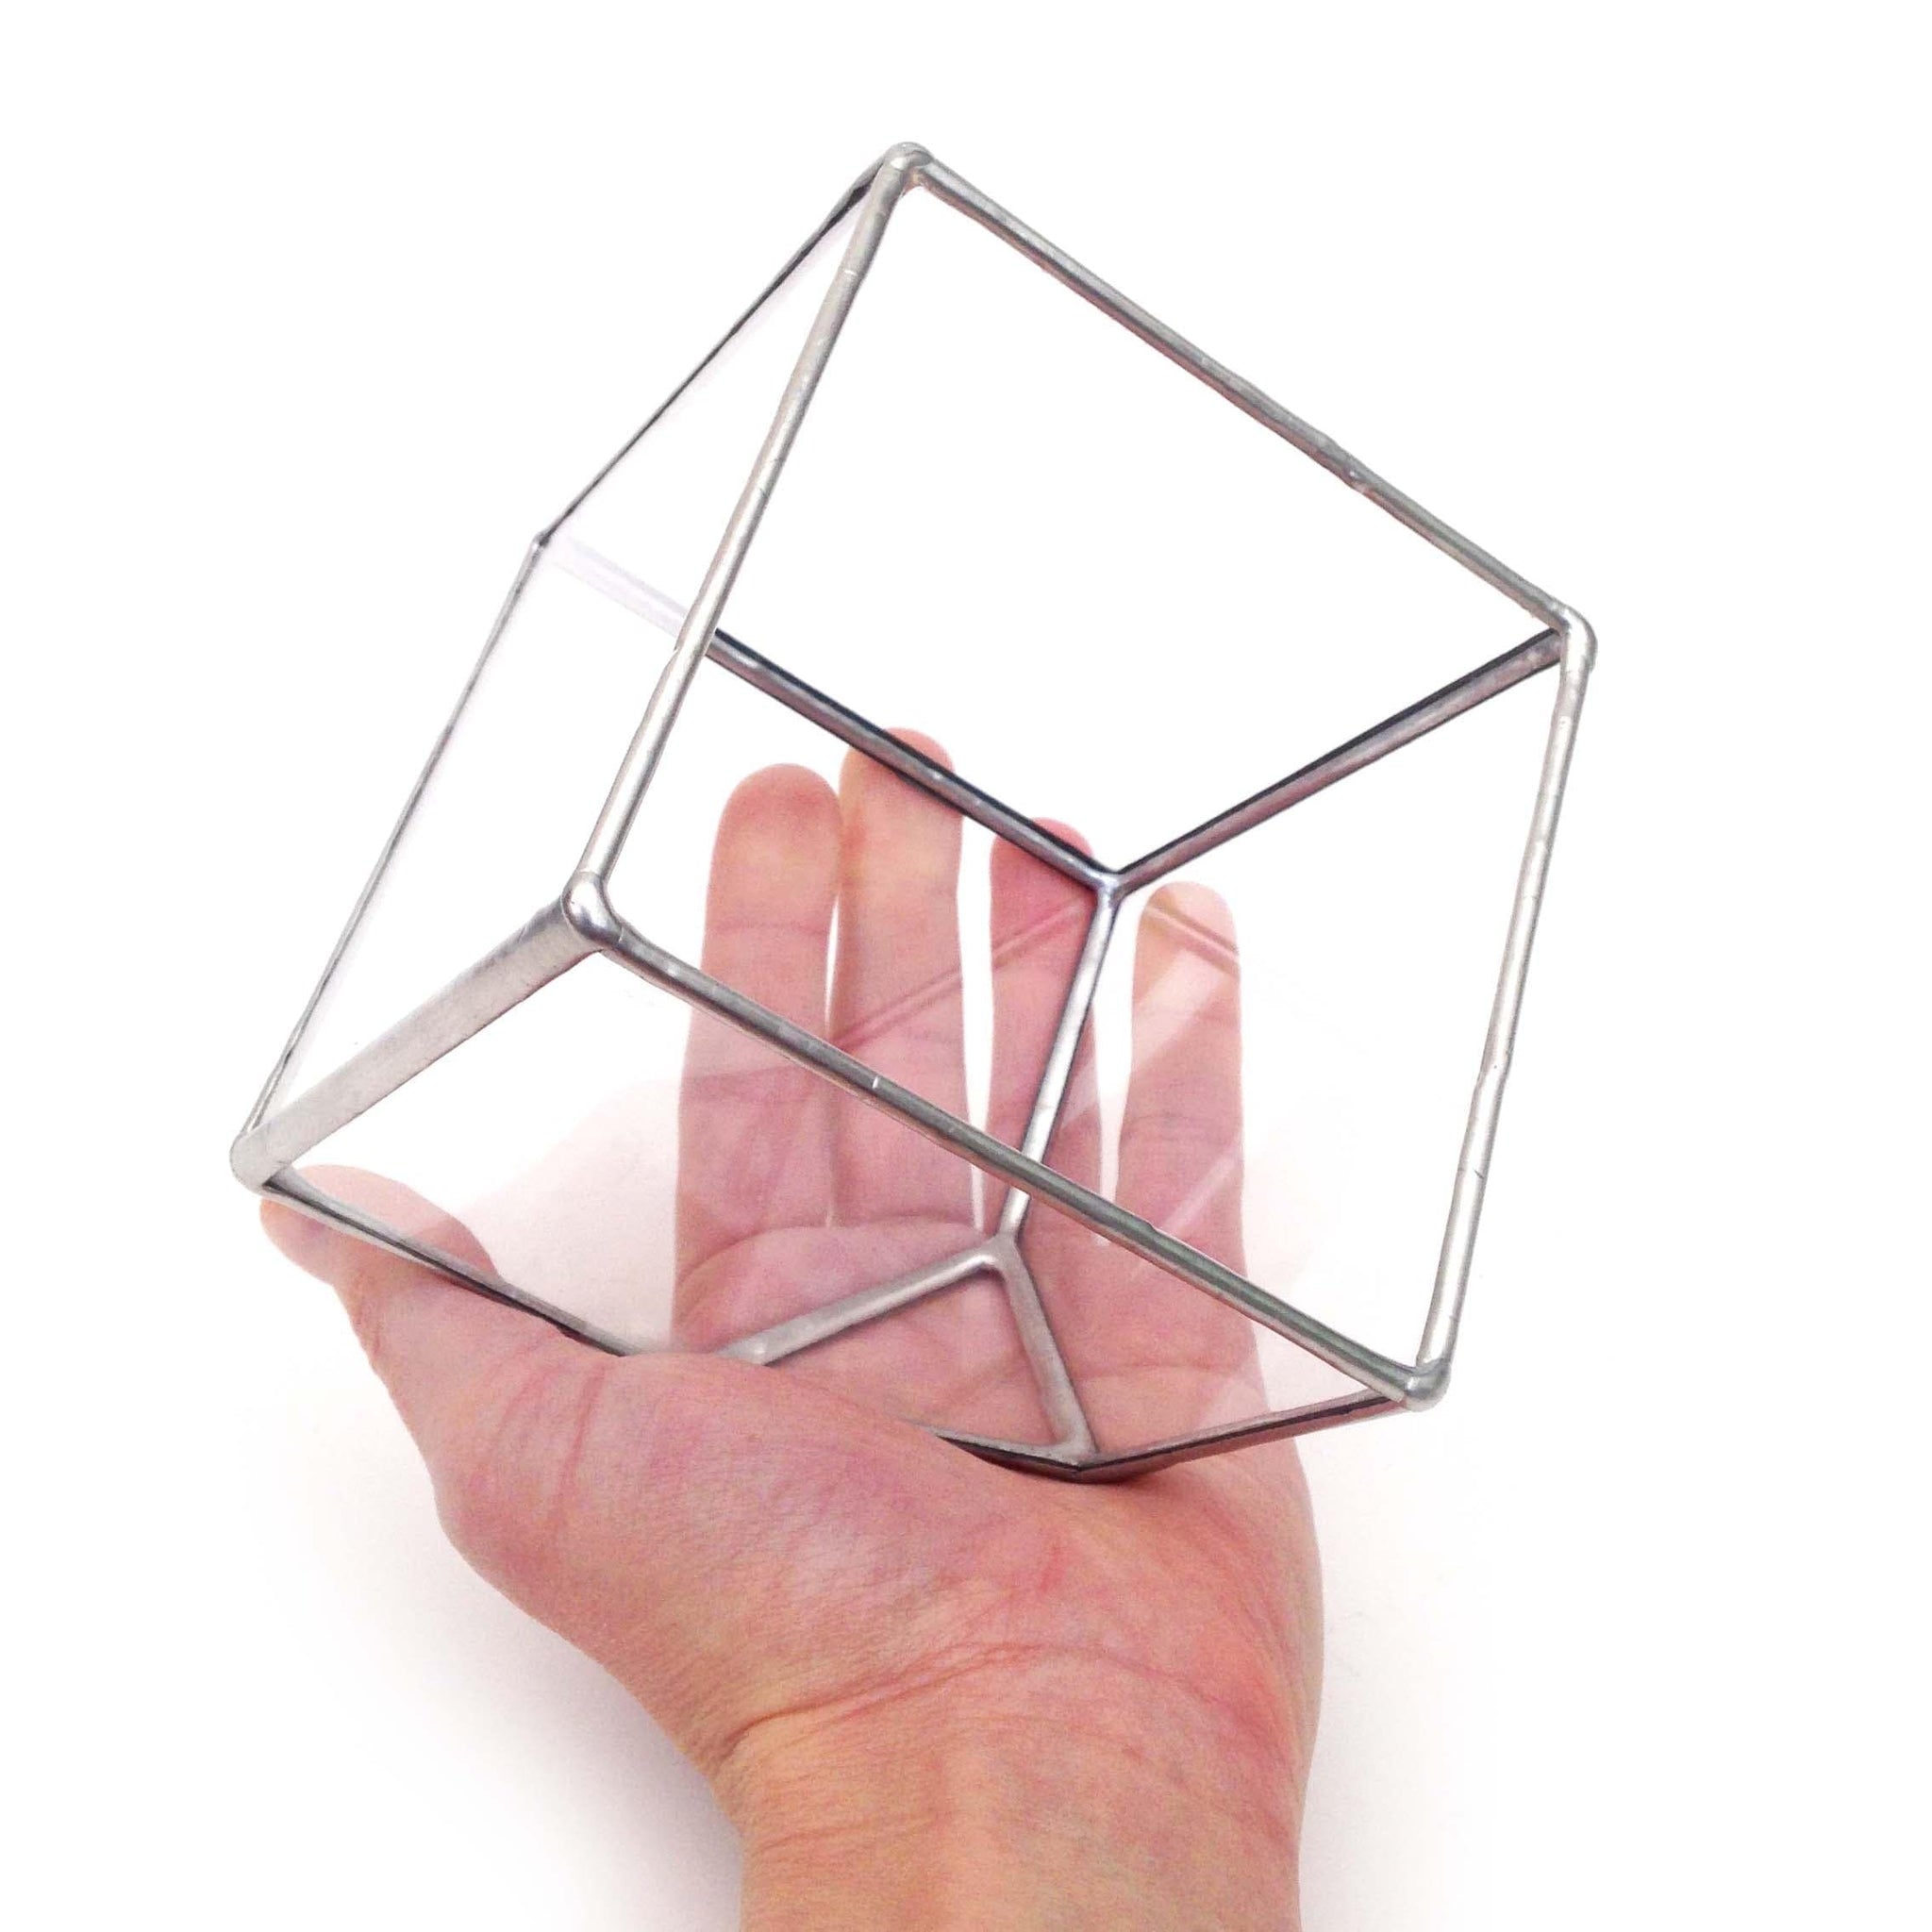 LeKoky Terrariums CUBE Geometric Glass Terrarium Small / Silver made by Lenka in Southampton England